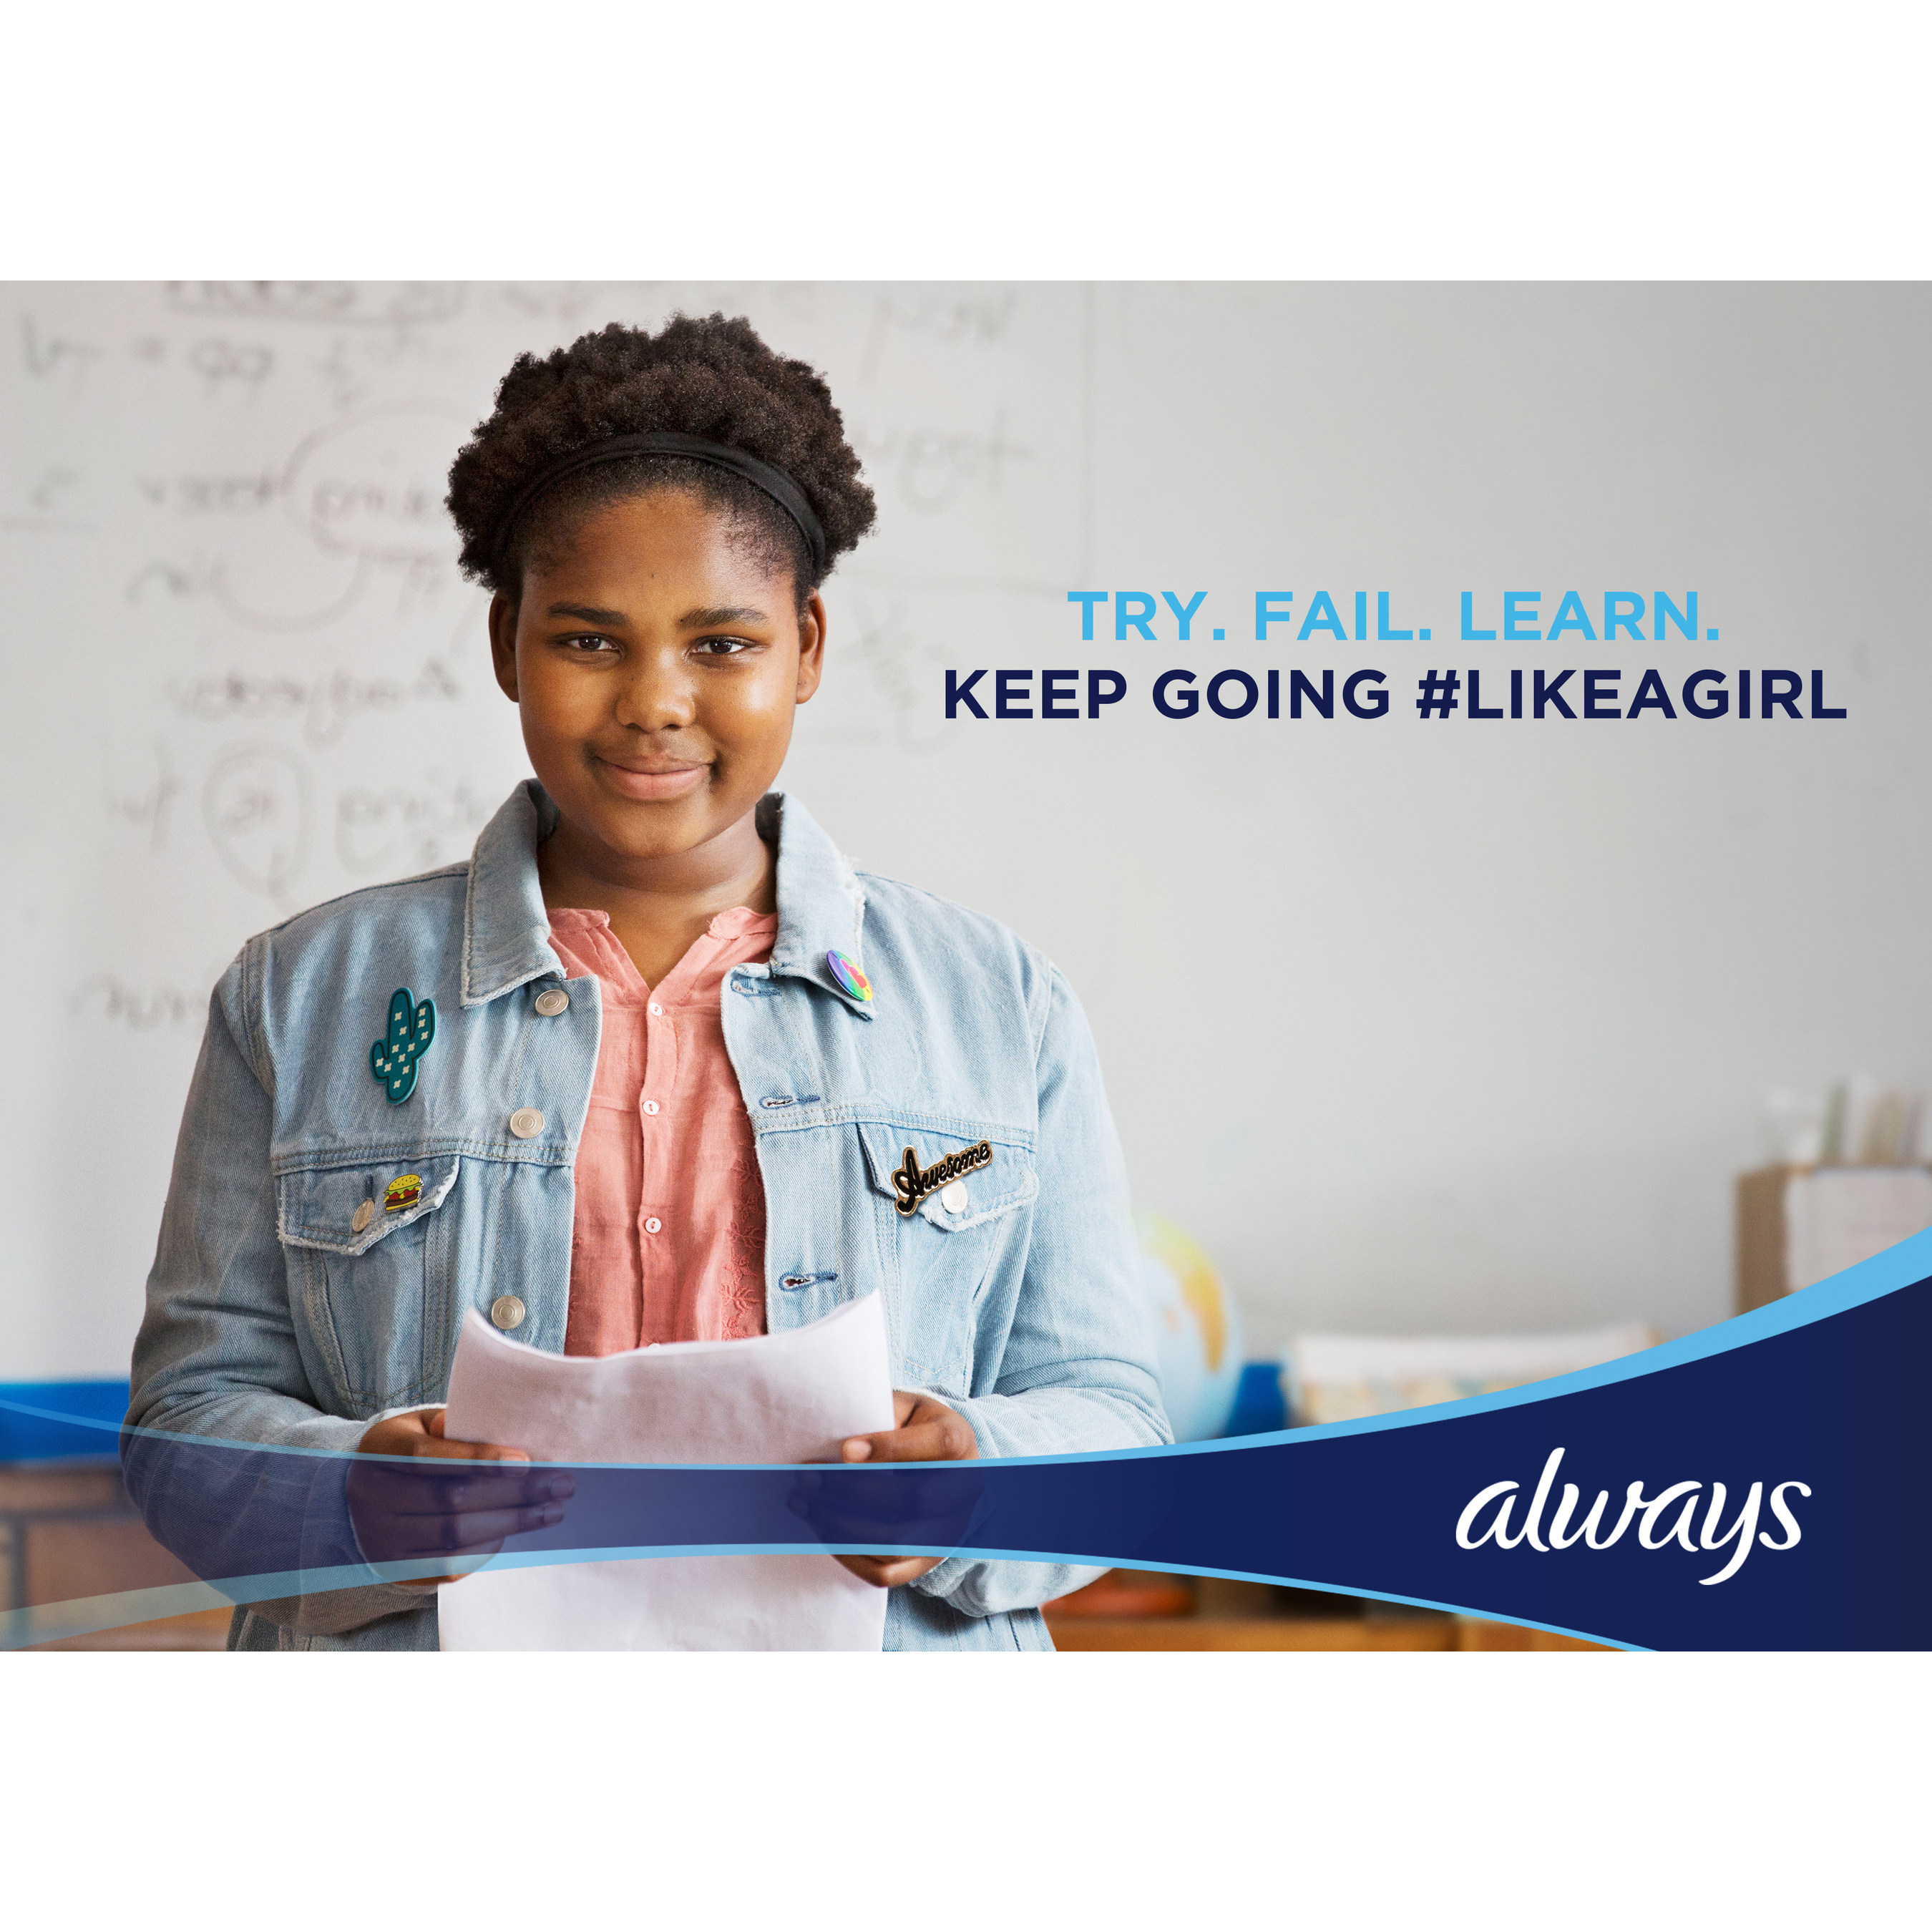 Failure during. Always #LIKEAGIRL. Рекламная кампания always #LIKEAGIRL. Always как девчонка. Кто снимался в рекламе always.